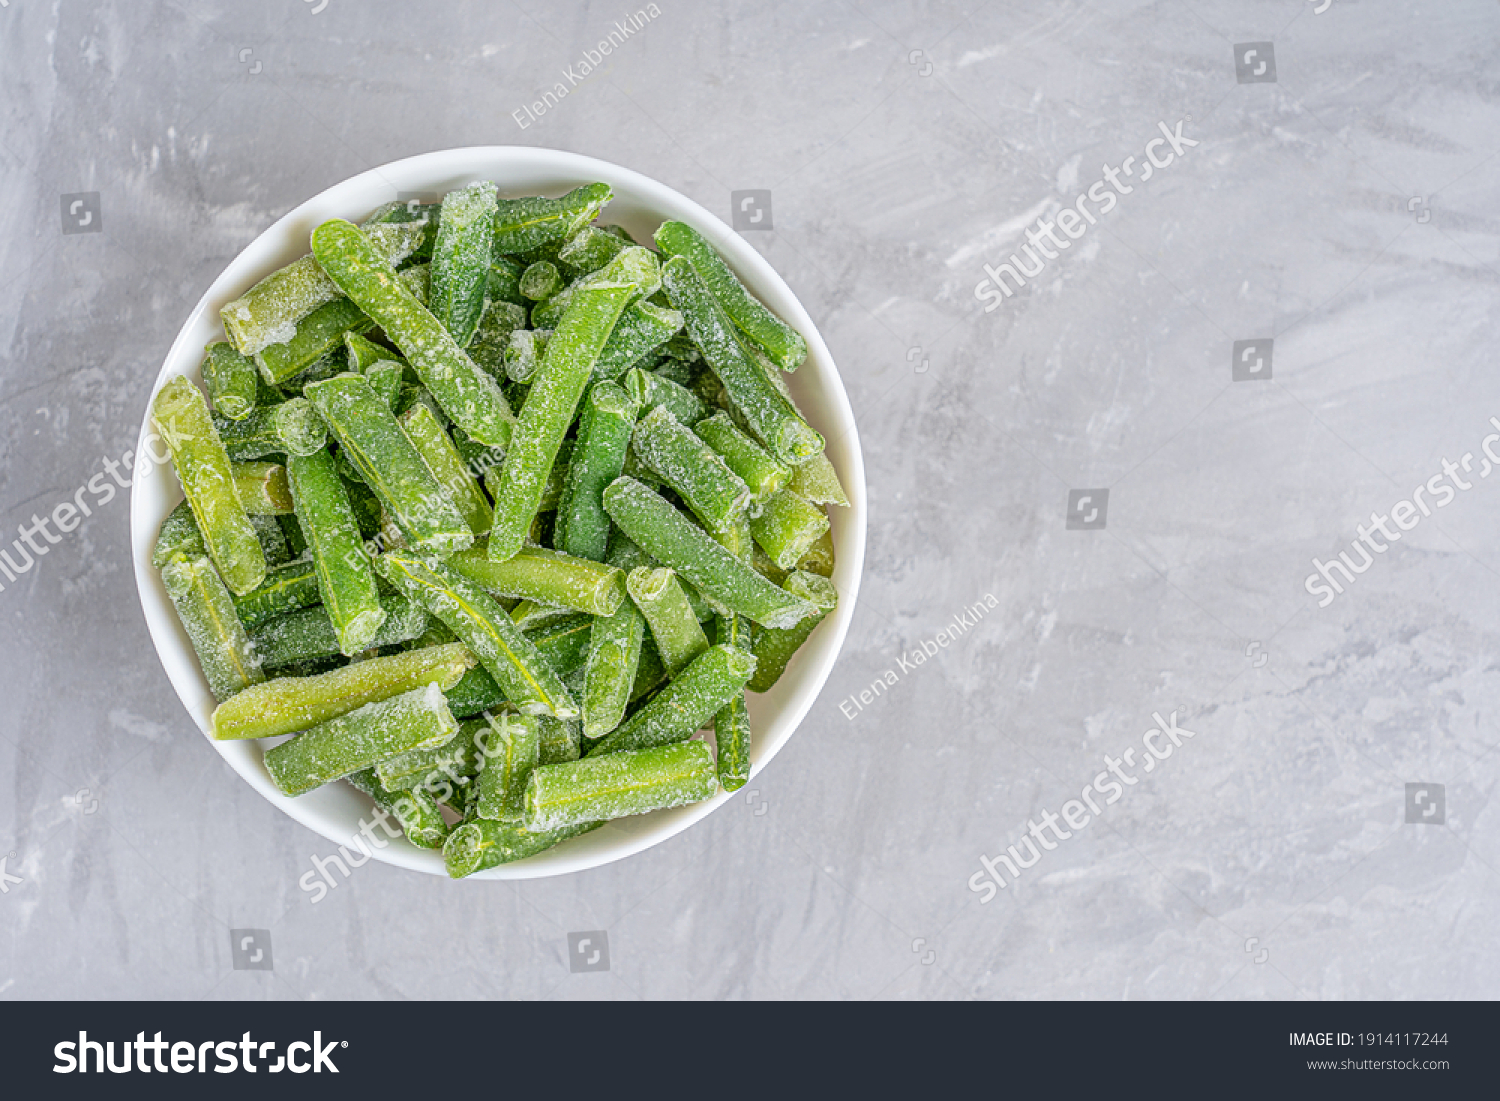 20,20 Benefict green salad Images, Stock Photos & Vectors ...